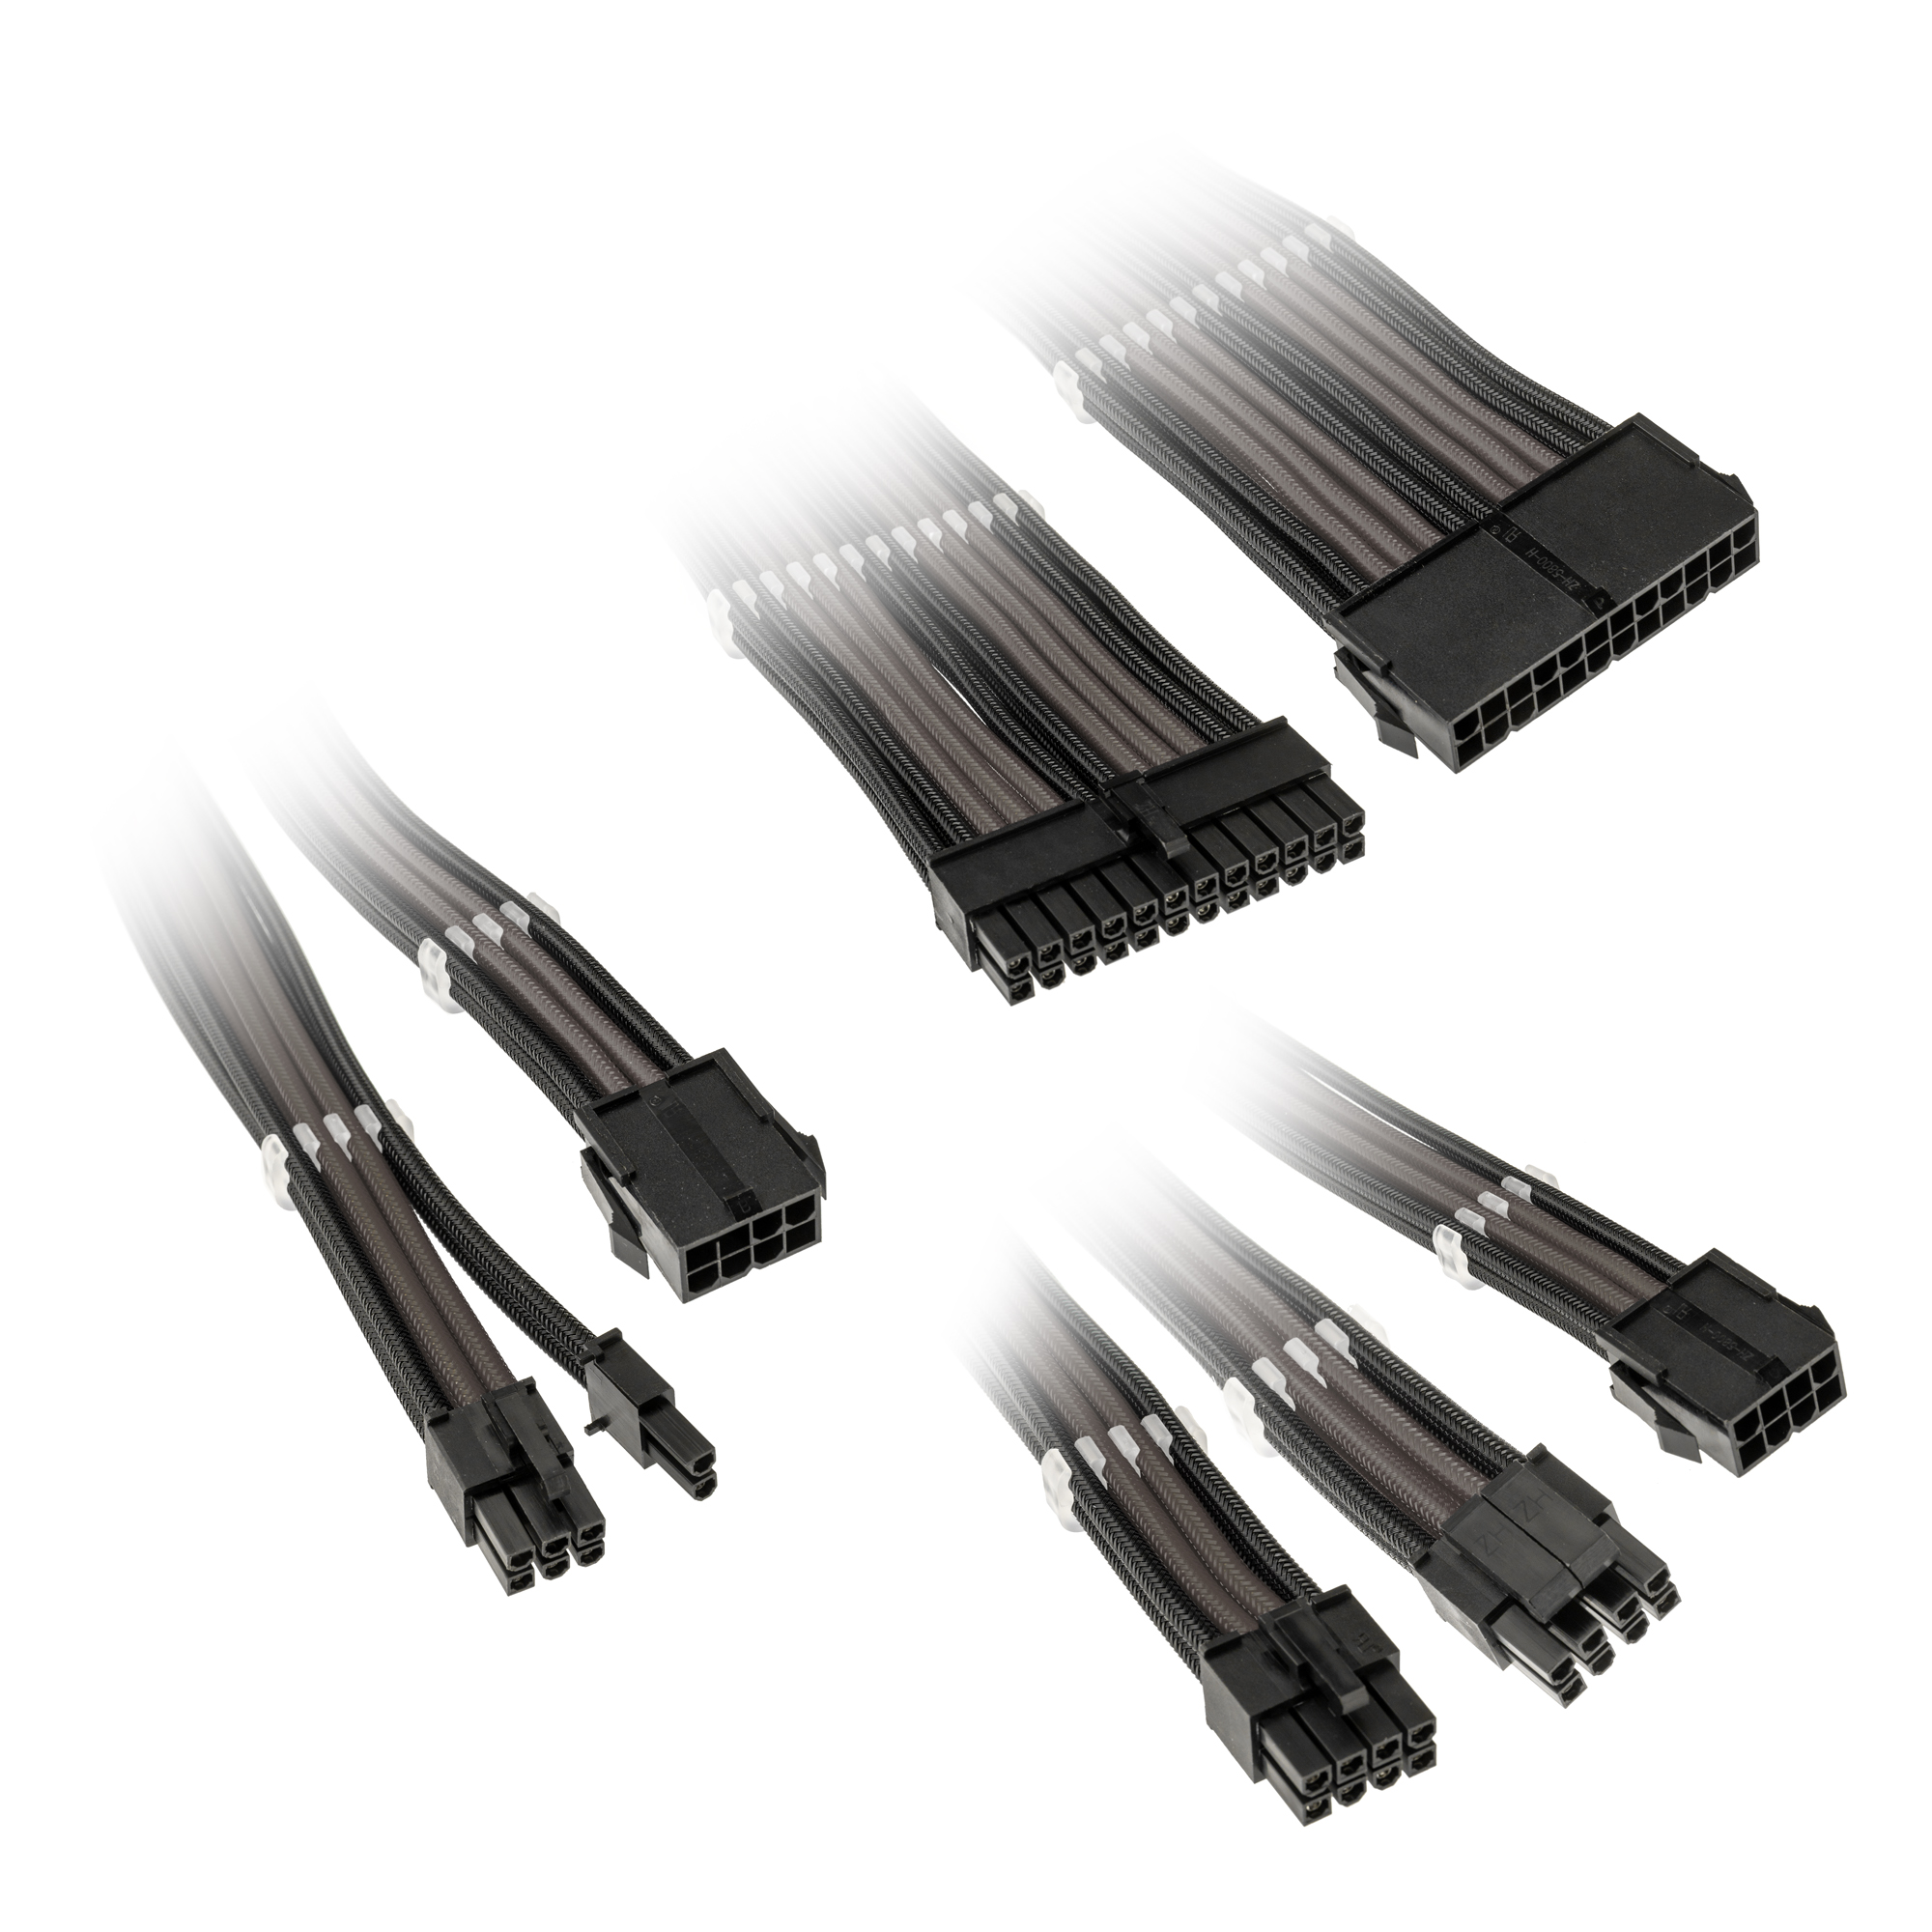 Kolink - Kolink Core Adept Braided Cable Extension Kit - Jet Black/Gunmetal Grey